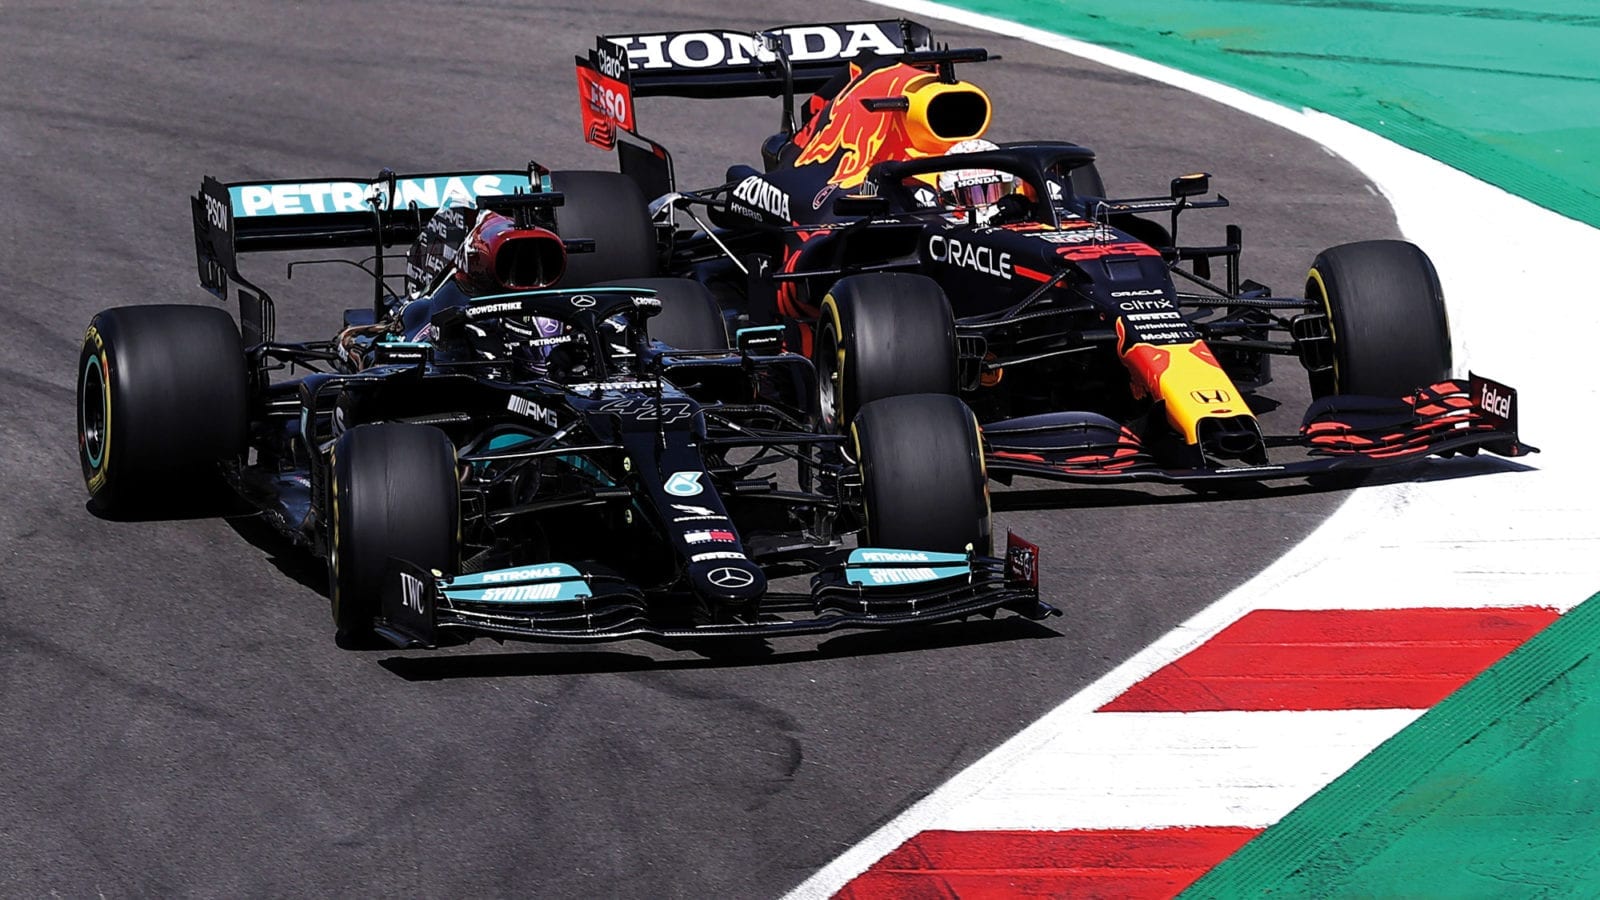 Lewis Hamilton and Max Verstappen battle in the 2021 Portuguese Grand Prix